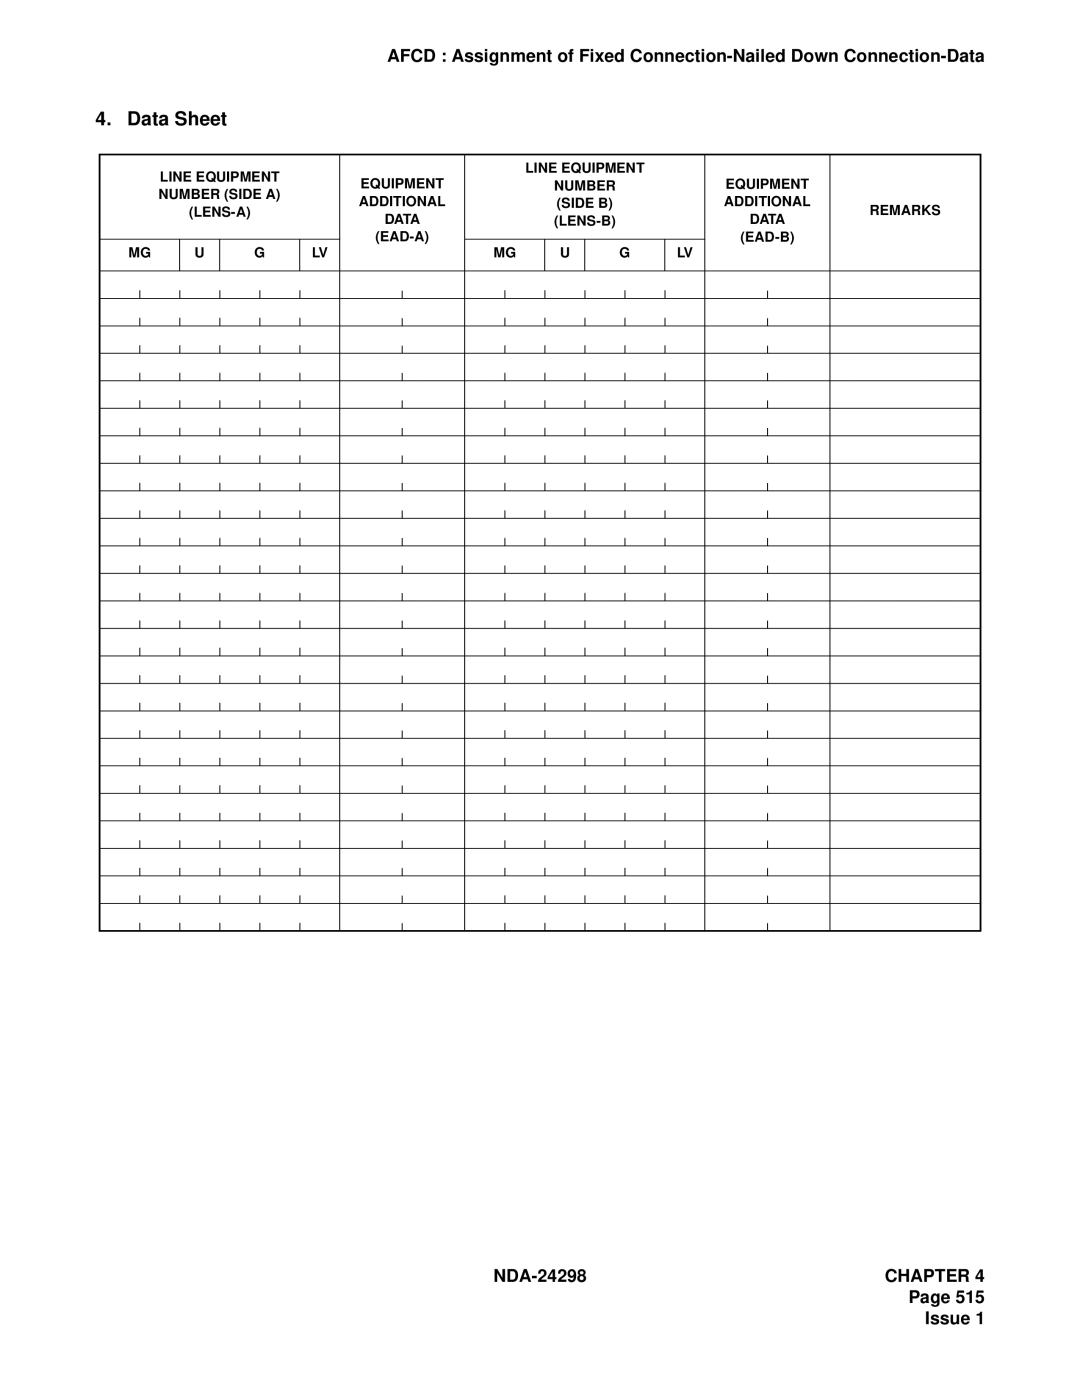 NEC NDA-24298 manual Data Sheet 